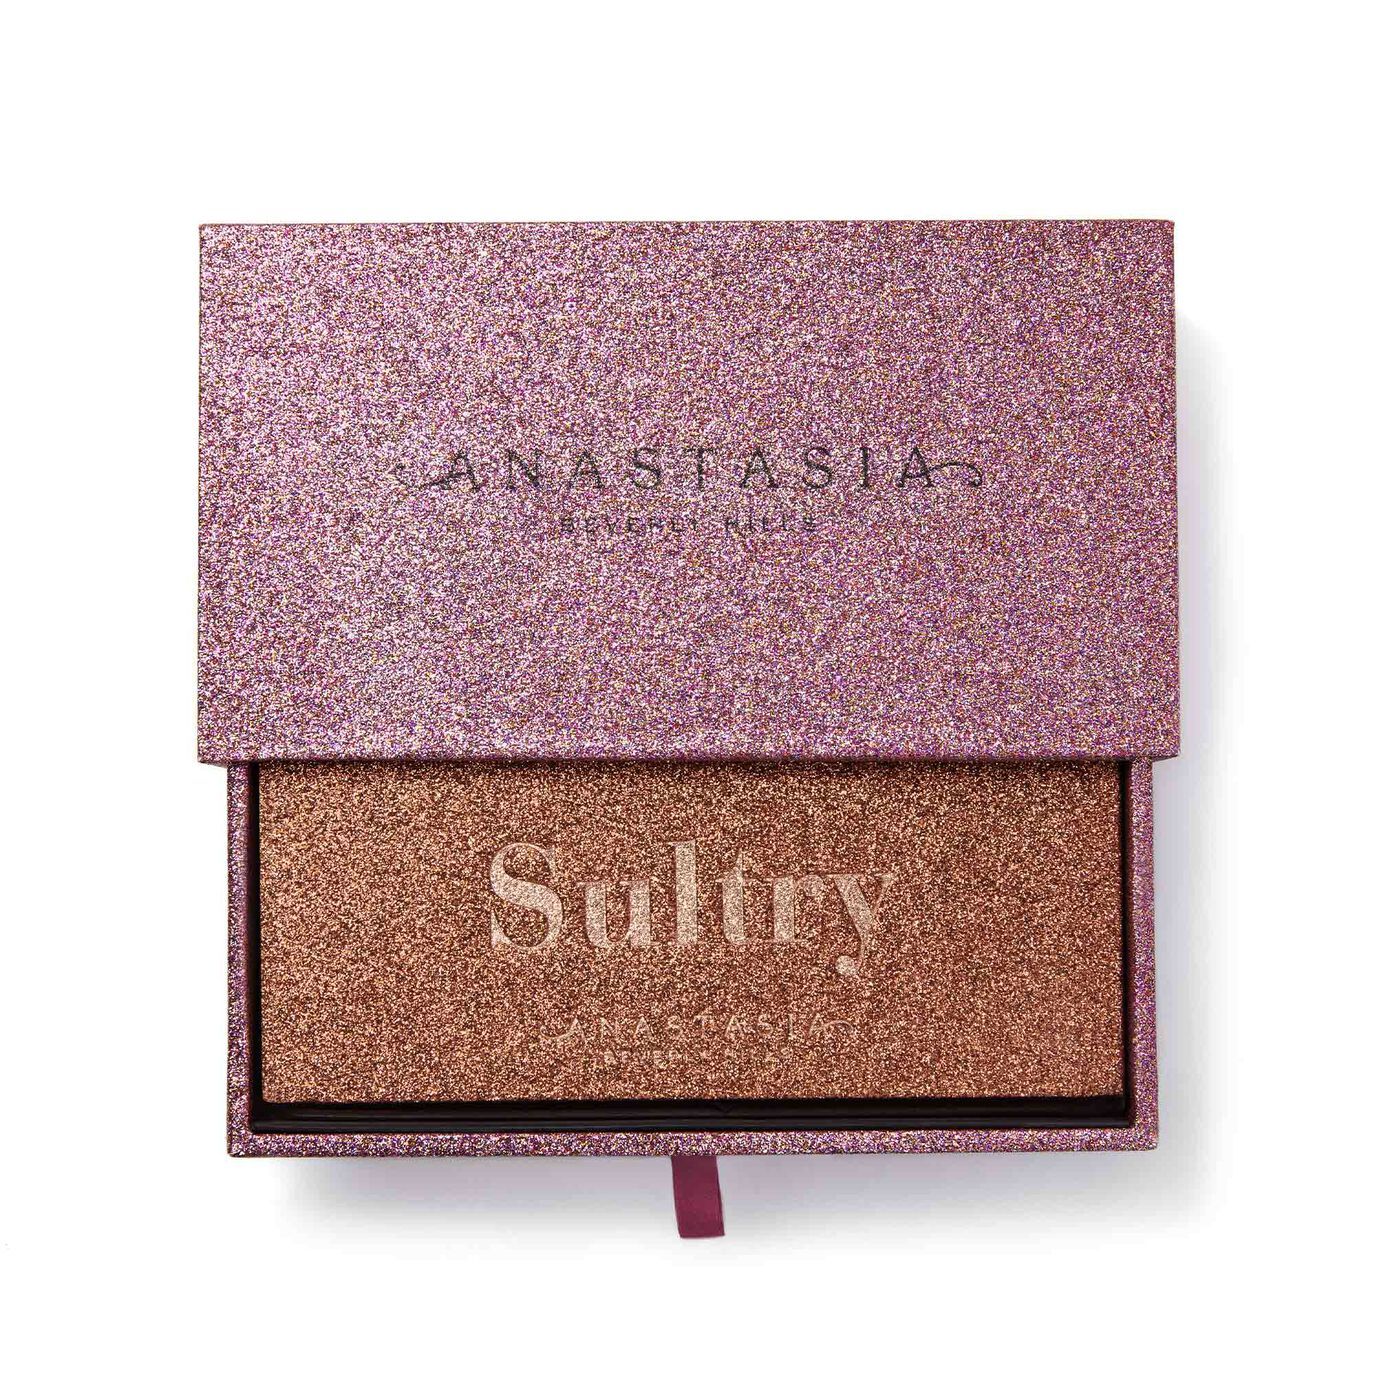 Anastasia Beverly Hills Sultry Eyeshadow Palette Vault